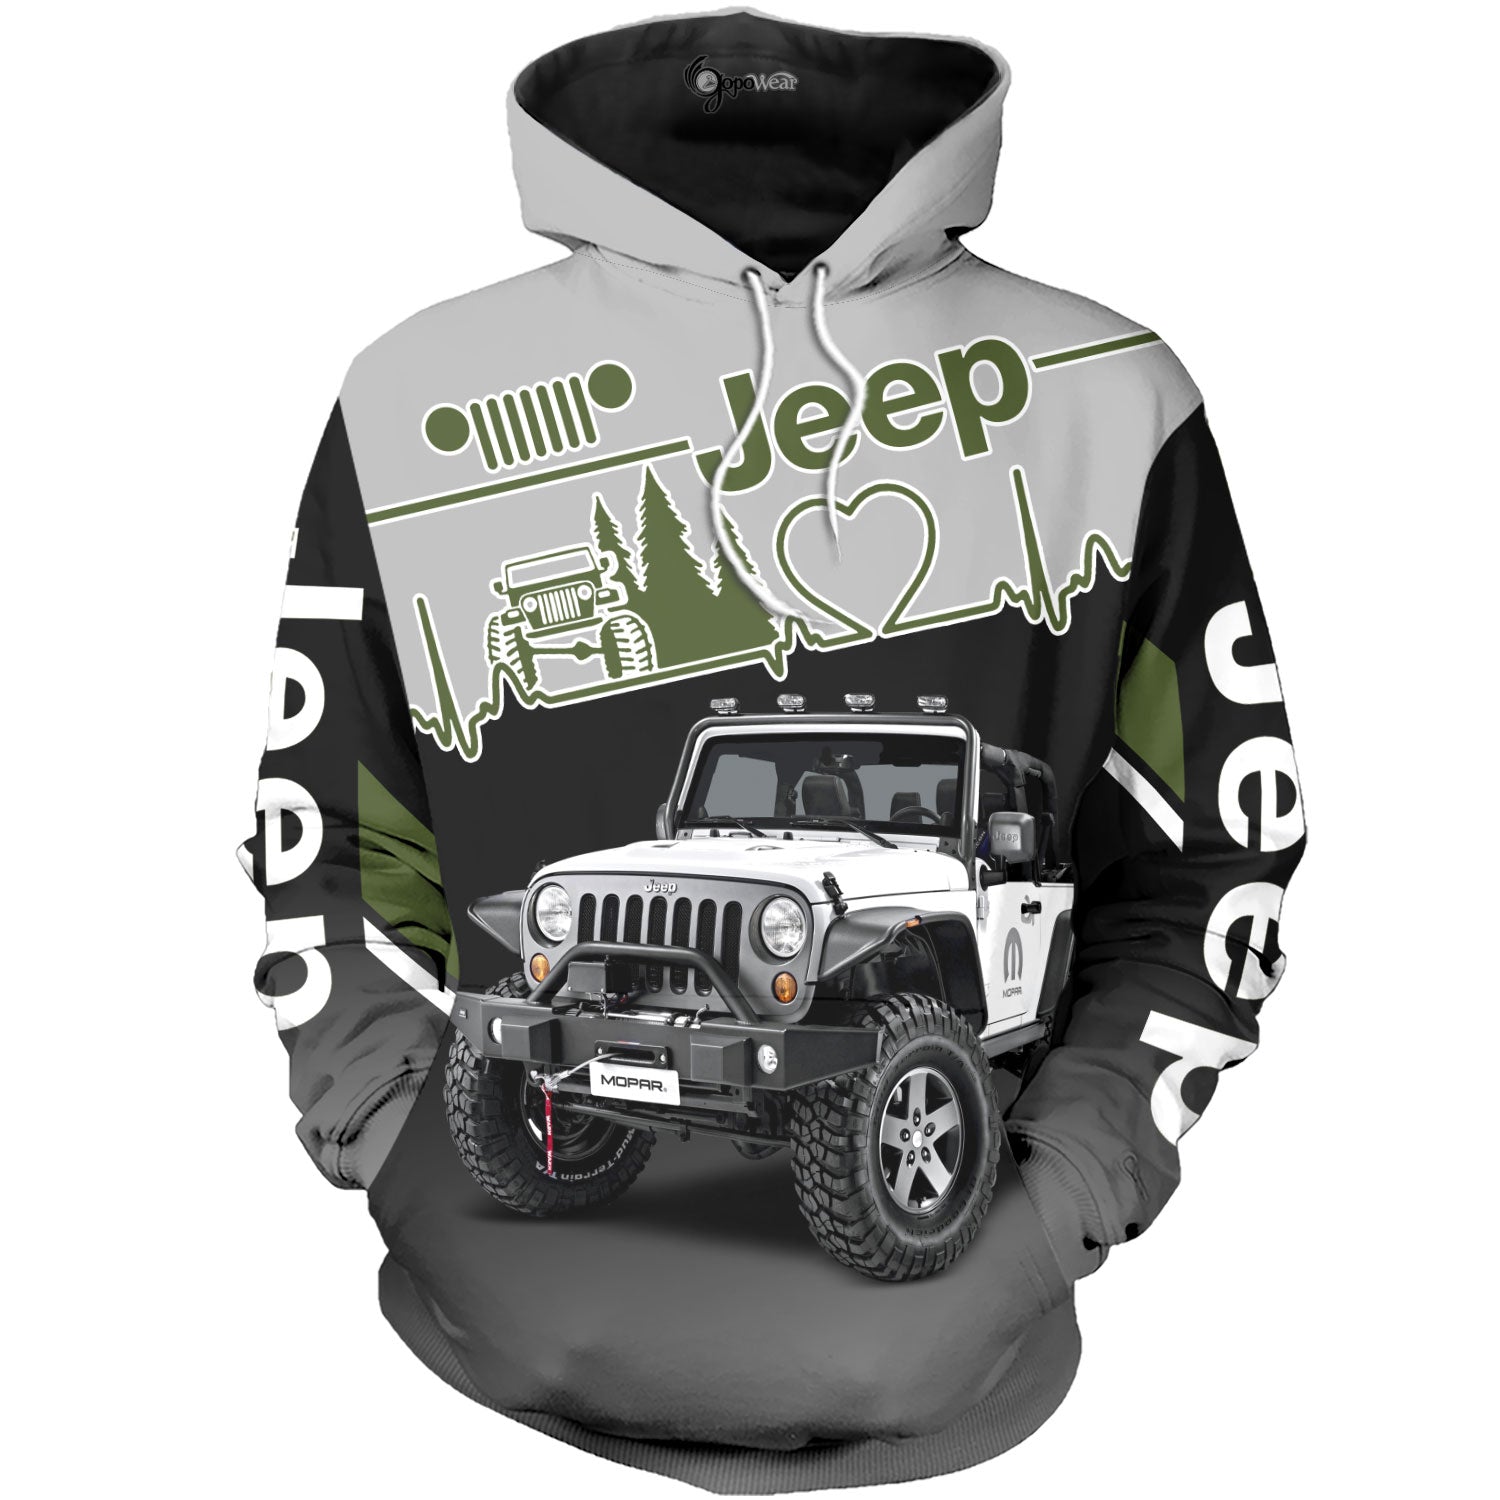 jeep rubicon sweatshirt